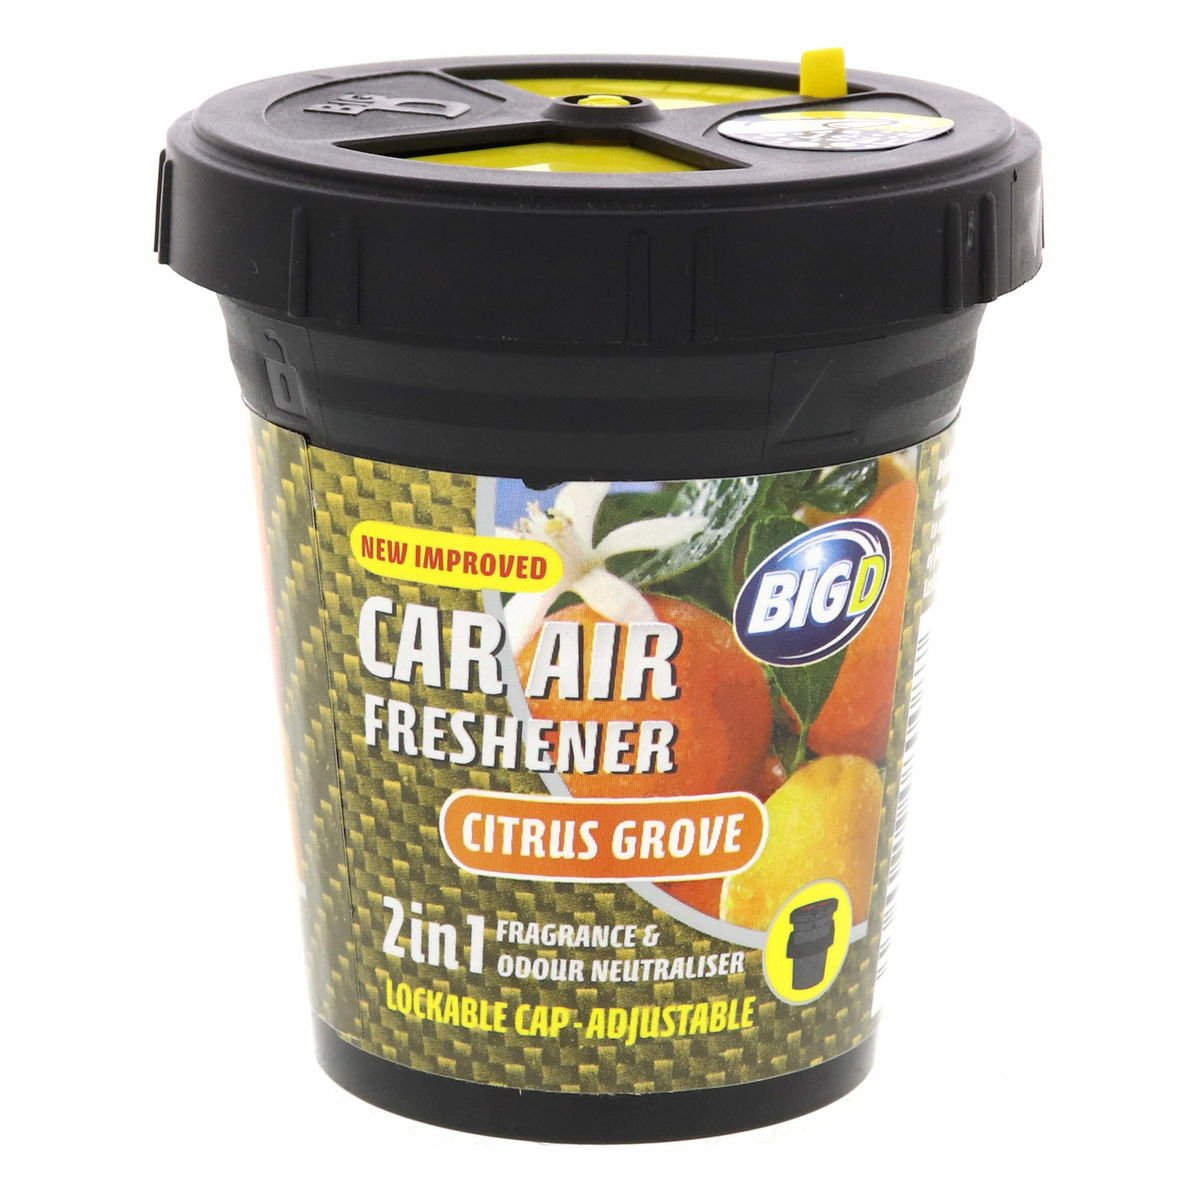 Big D Car Air Freshener Citrus Grove 130g